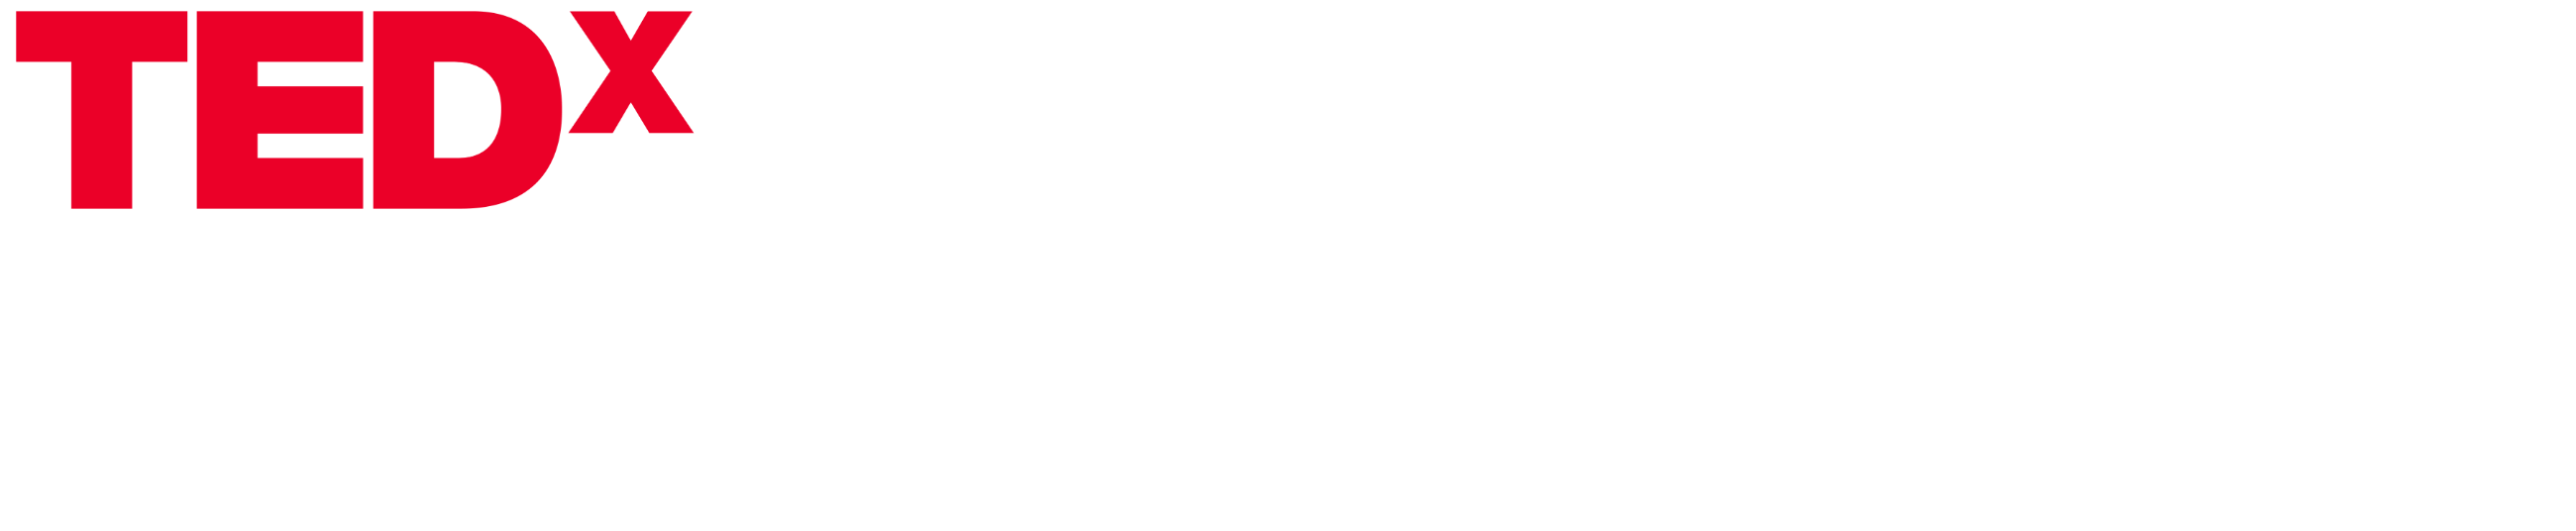 TEDxHensemberger